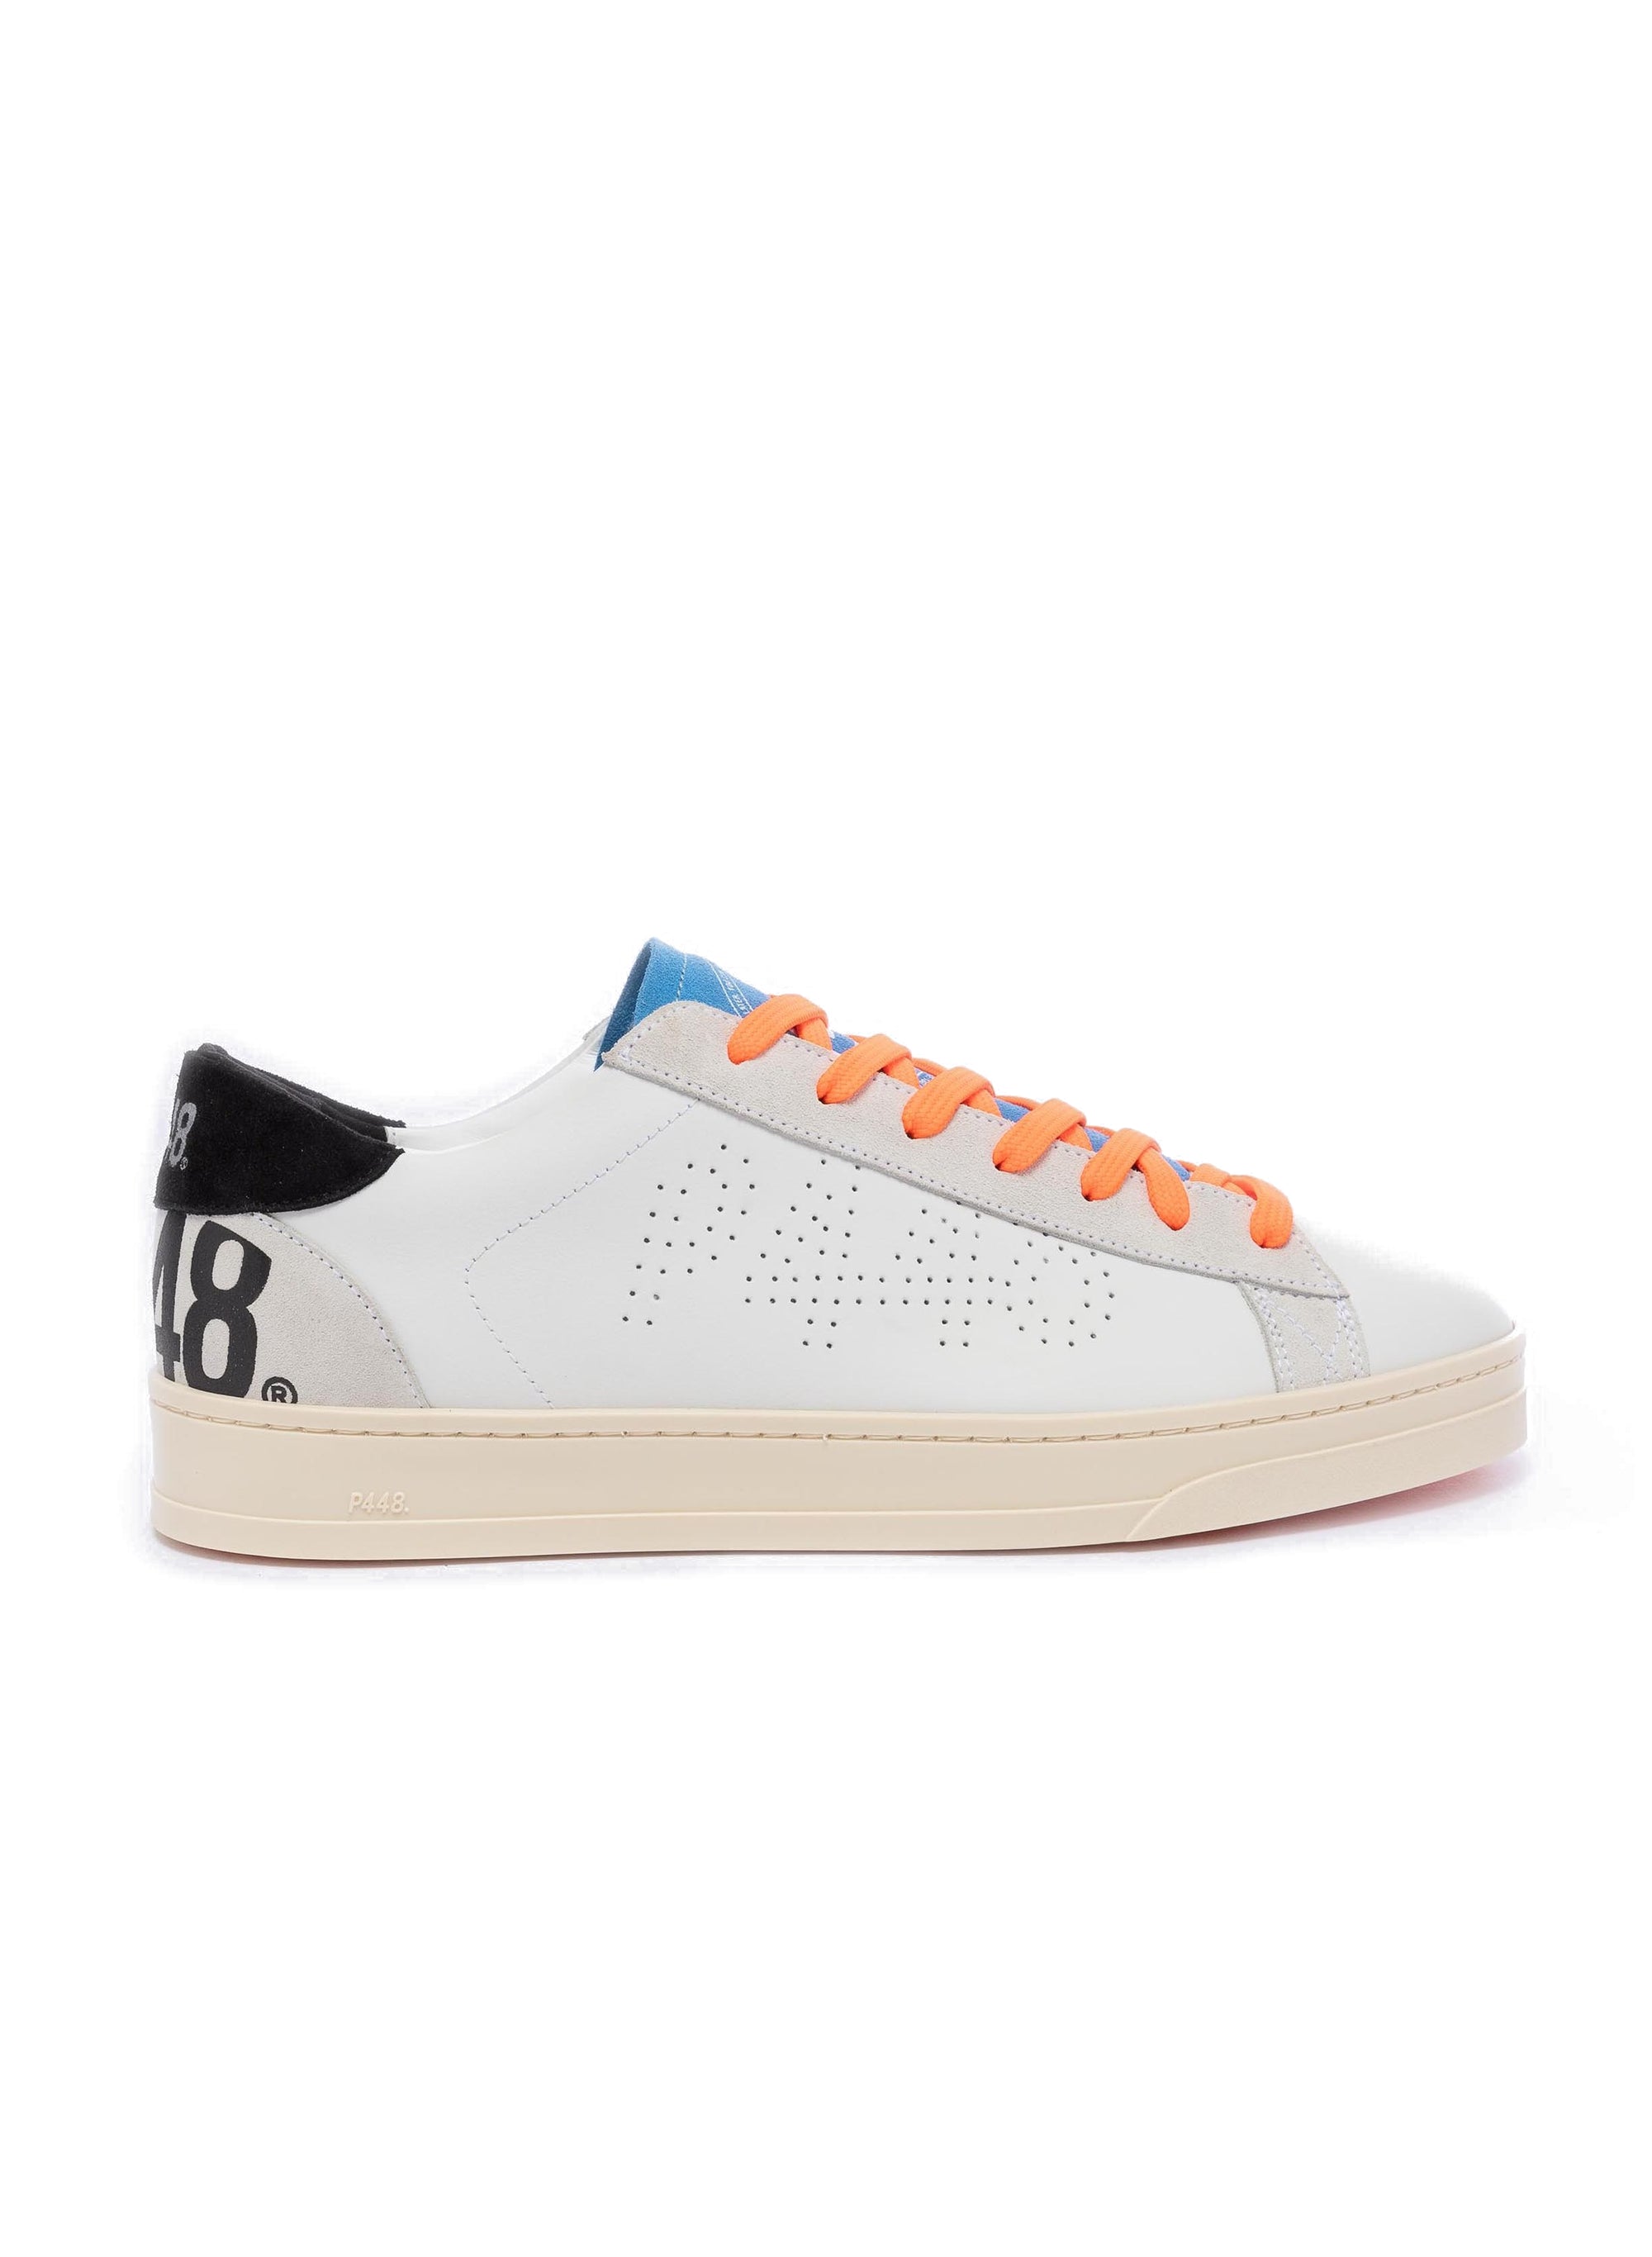 Sneaker P448 Jack
Bianco/arancio